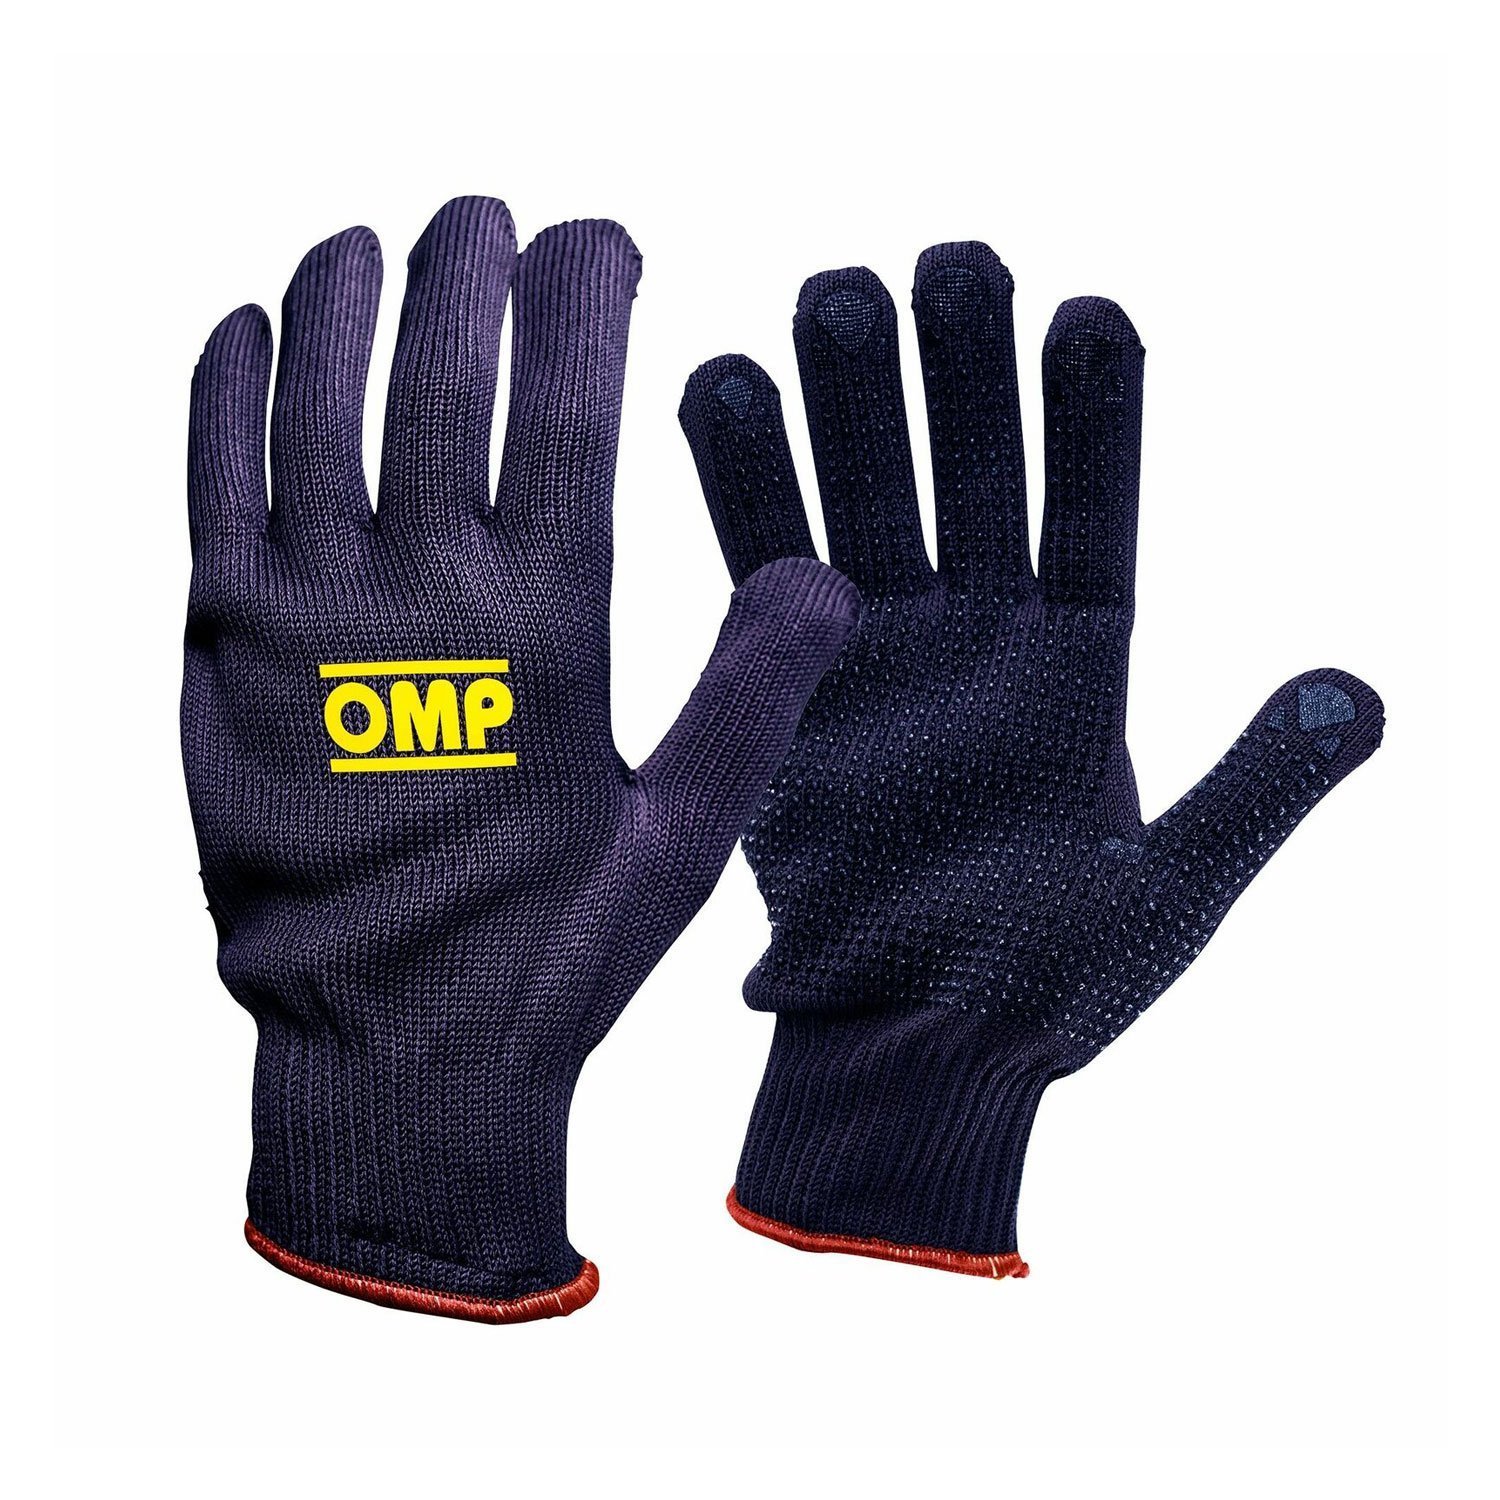 OMP Italy NB/1885 Mechanics | Racewear \ Gloves Shop by Team \ Motorsport Equipment \ OMP | F1store.net